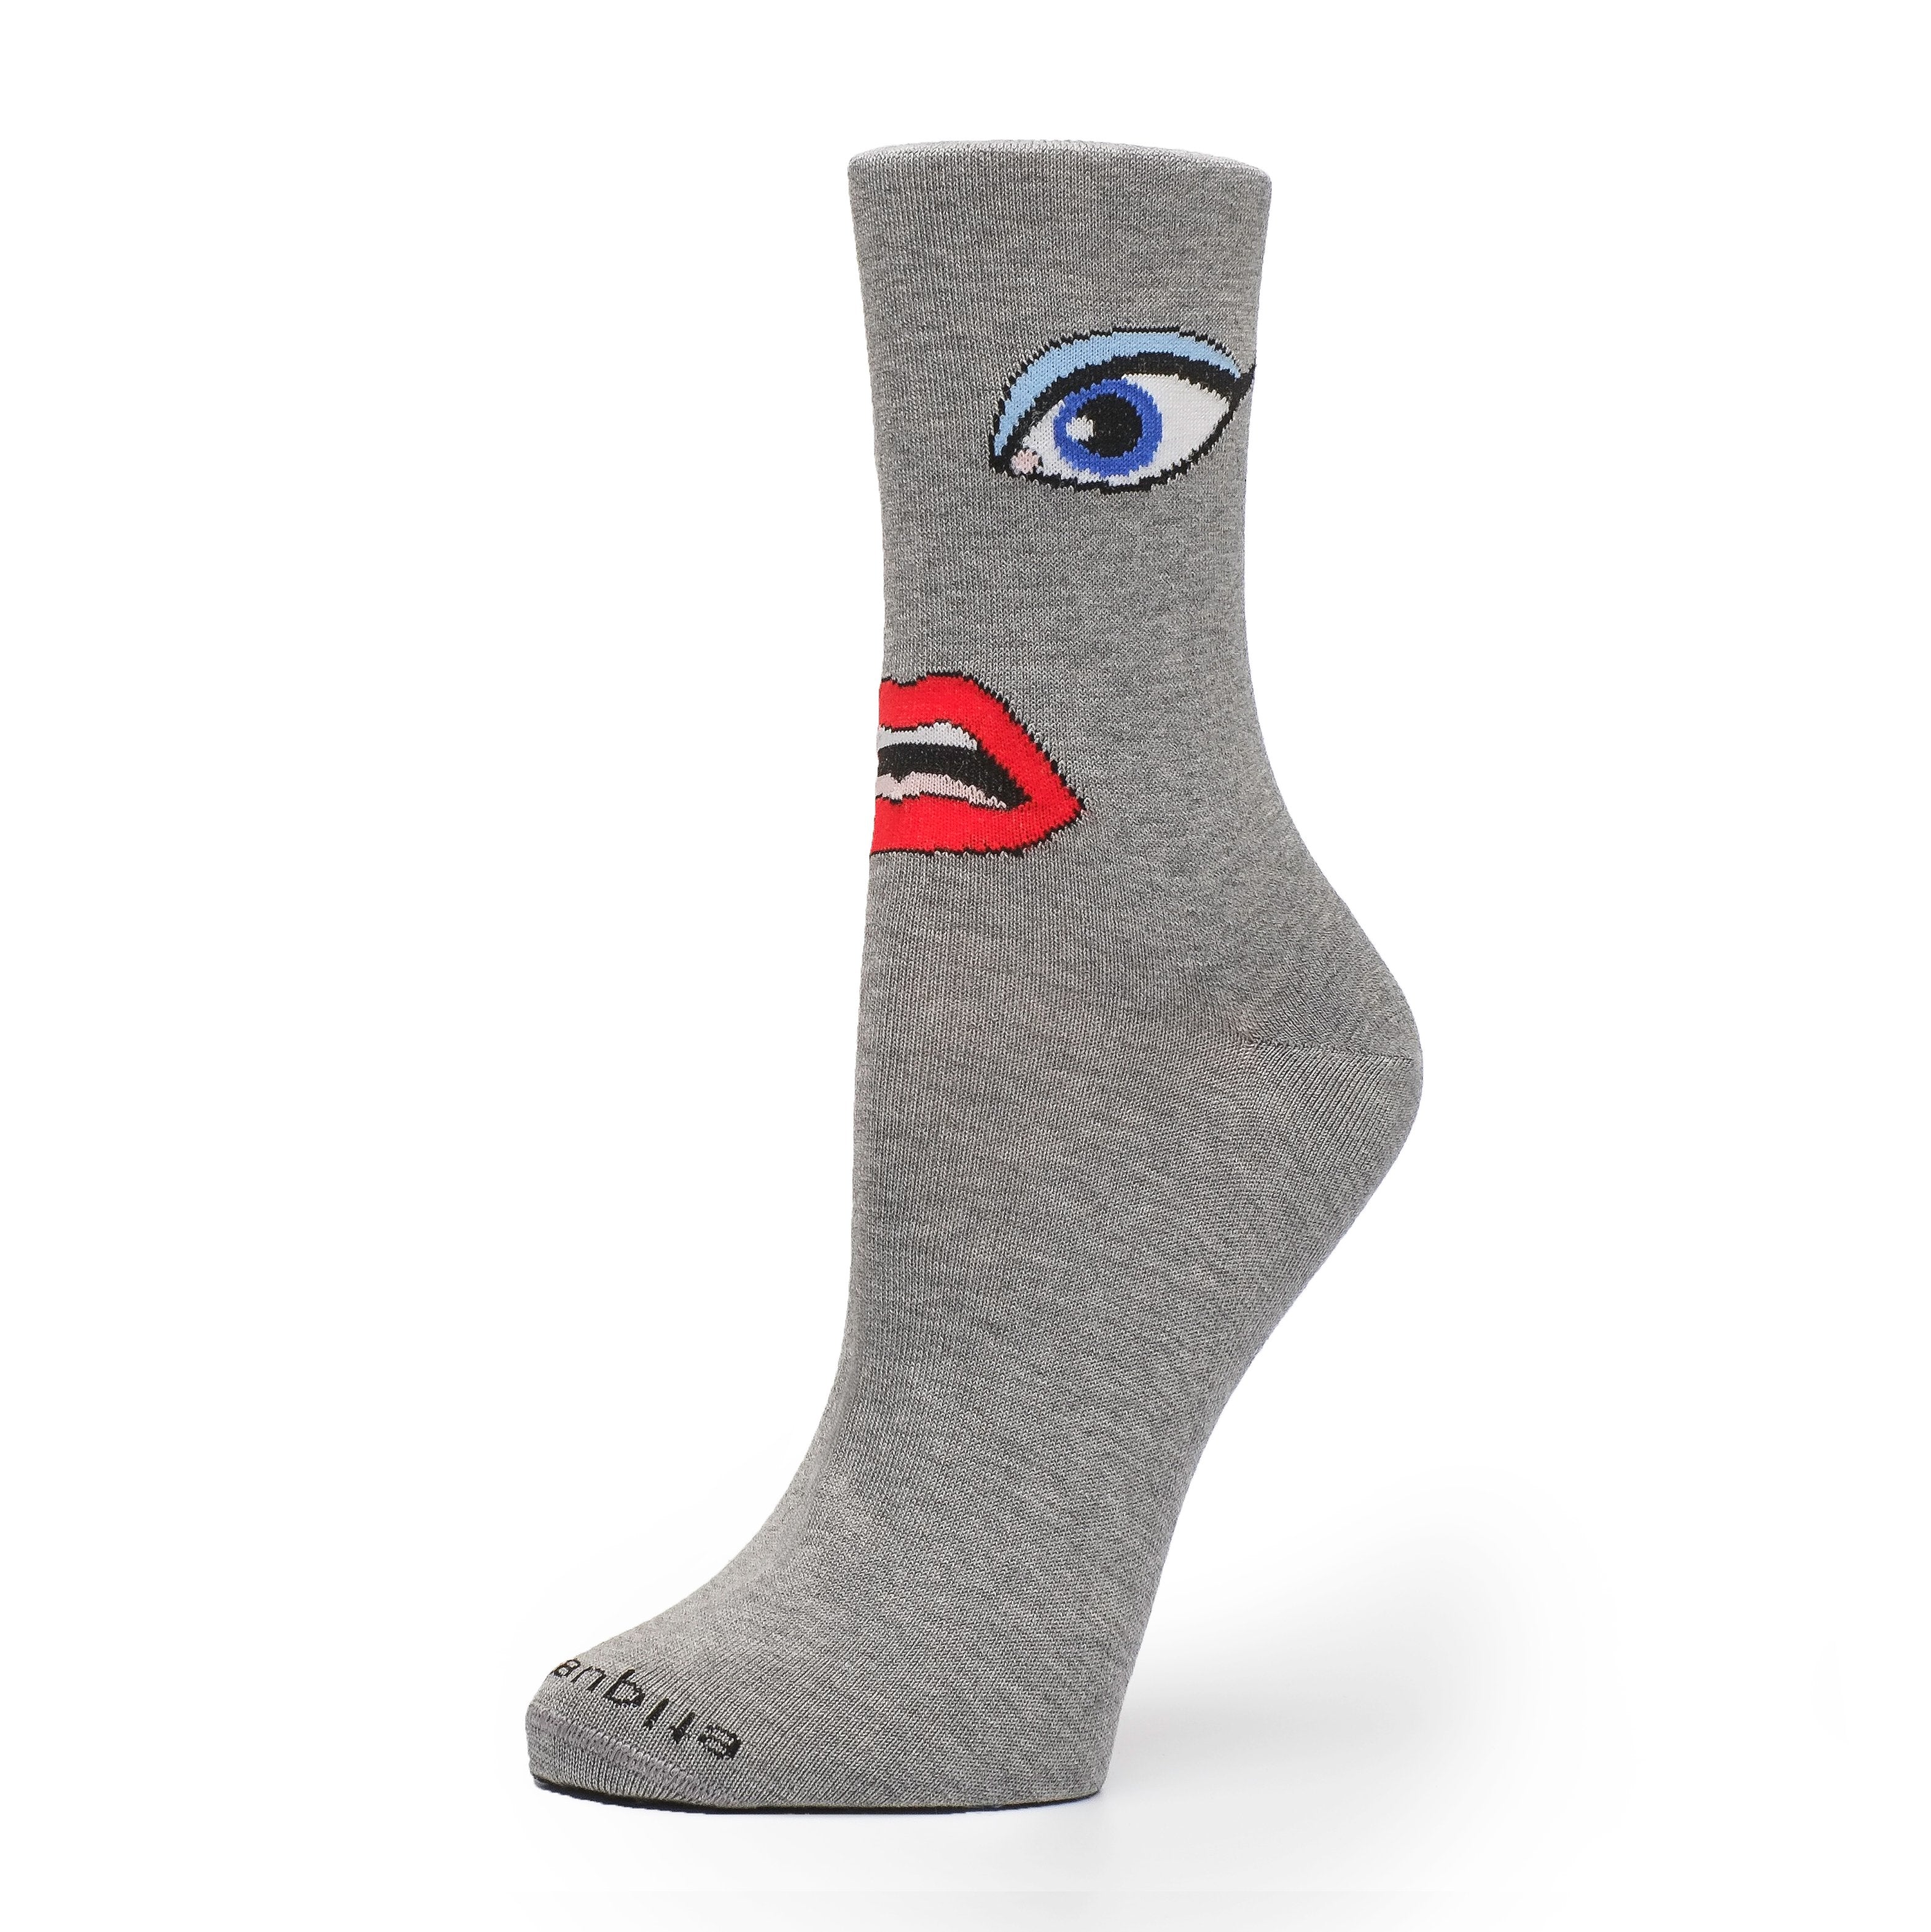 Womens Socks - Etiquette x Yazbukey Lips & Eyes Socks - Grey⎪Etiquette Clothiers